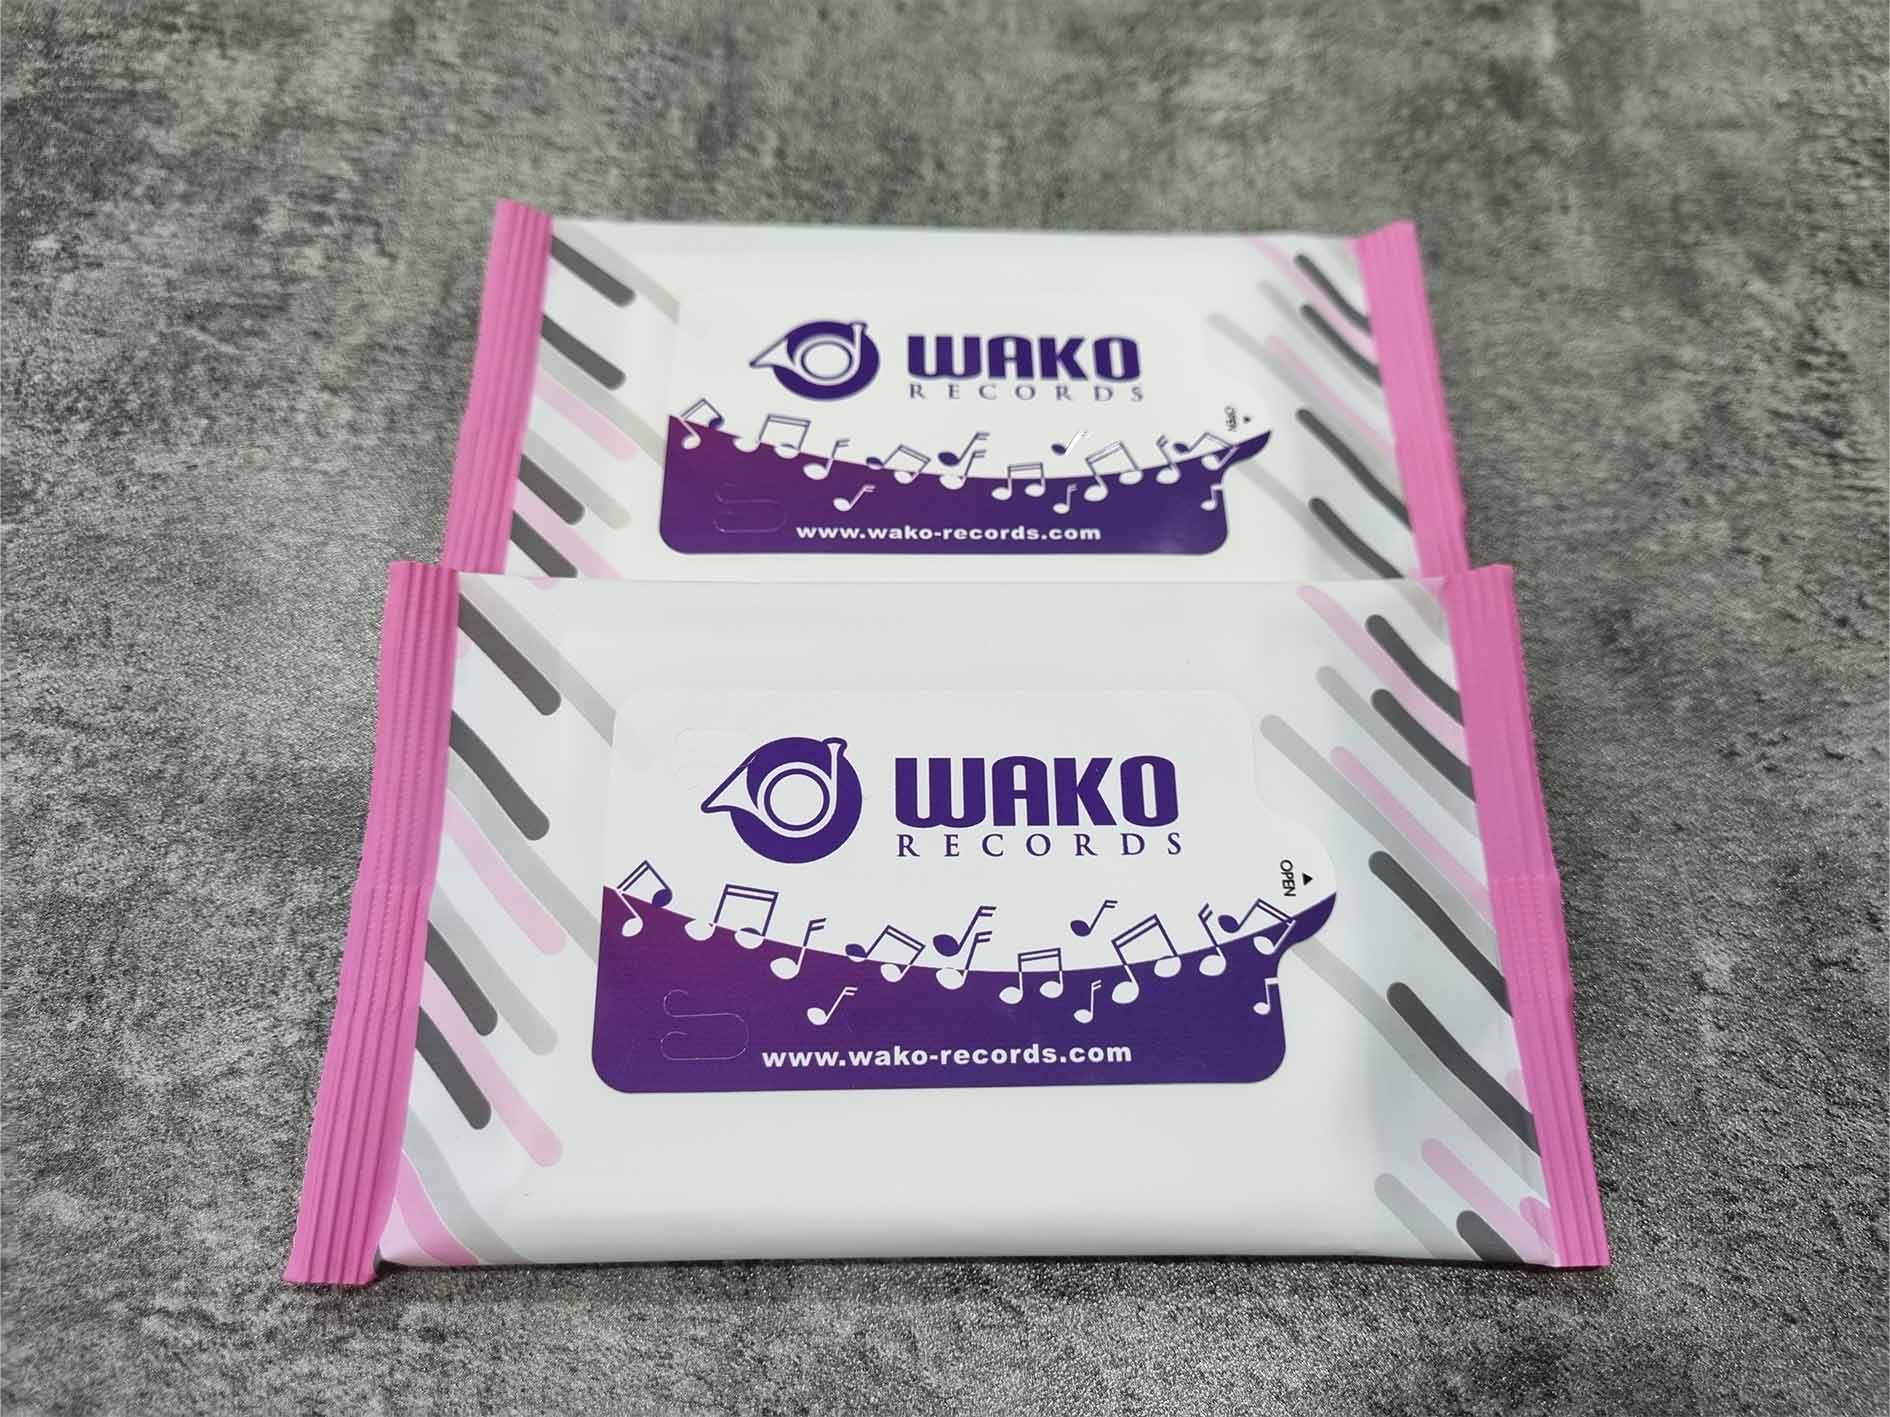 WAKO RECORDS, 株式会社ワコーレコードの名入れウェットティッシュ